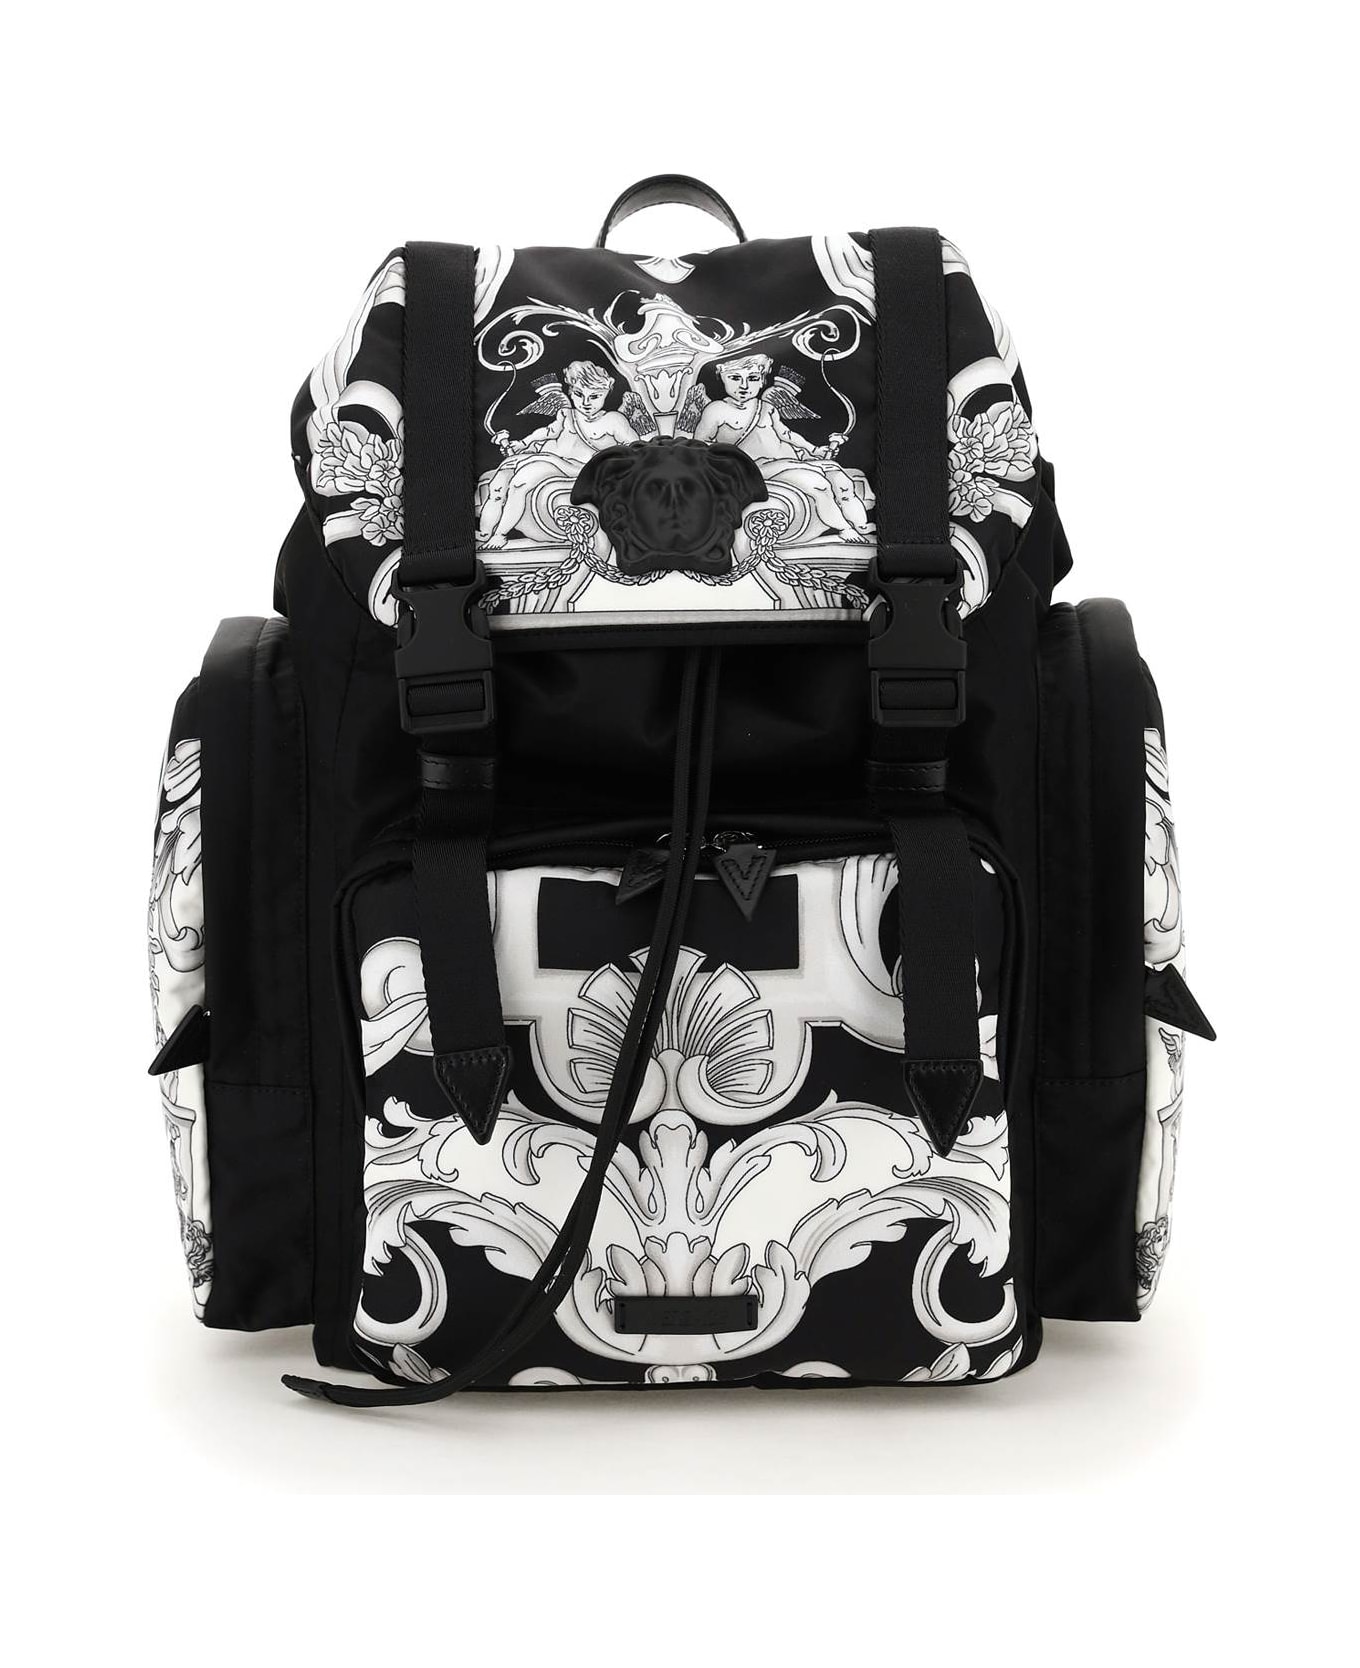 Versace Silver Baroque Print Nylon Medusa Backpack - NERO BIANCO NERO PALLADIO (Black)